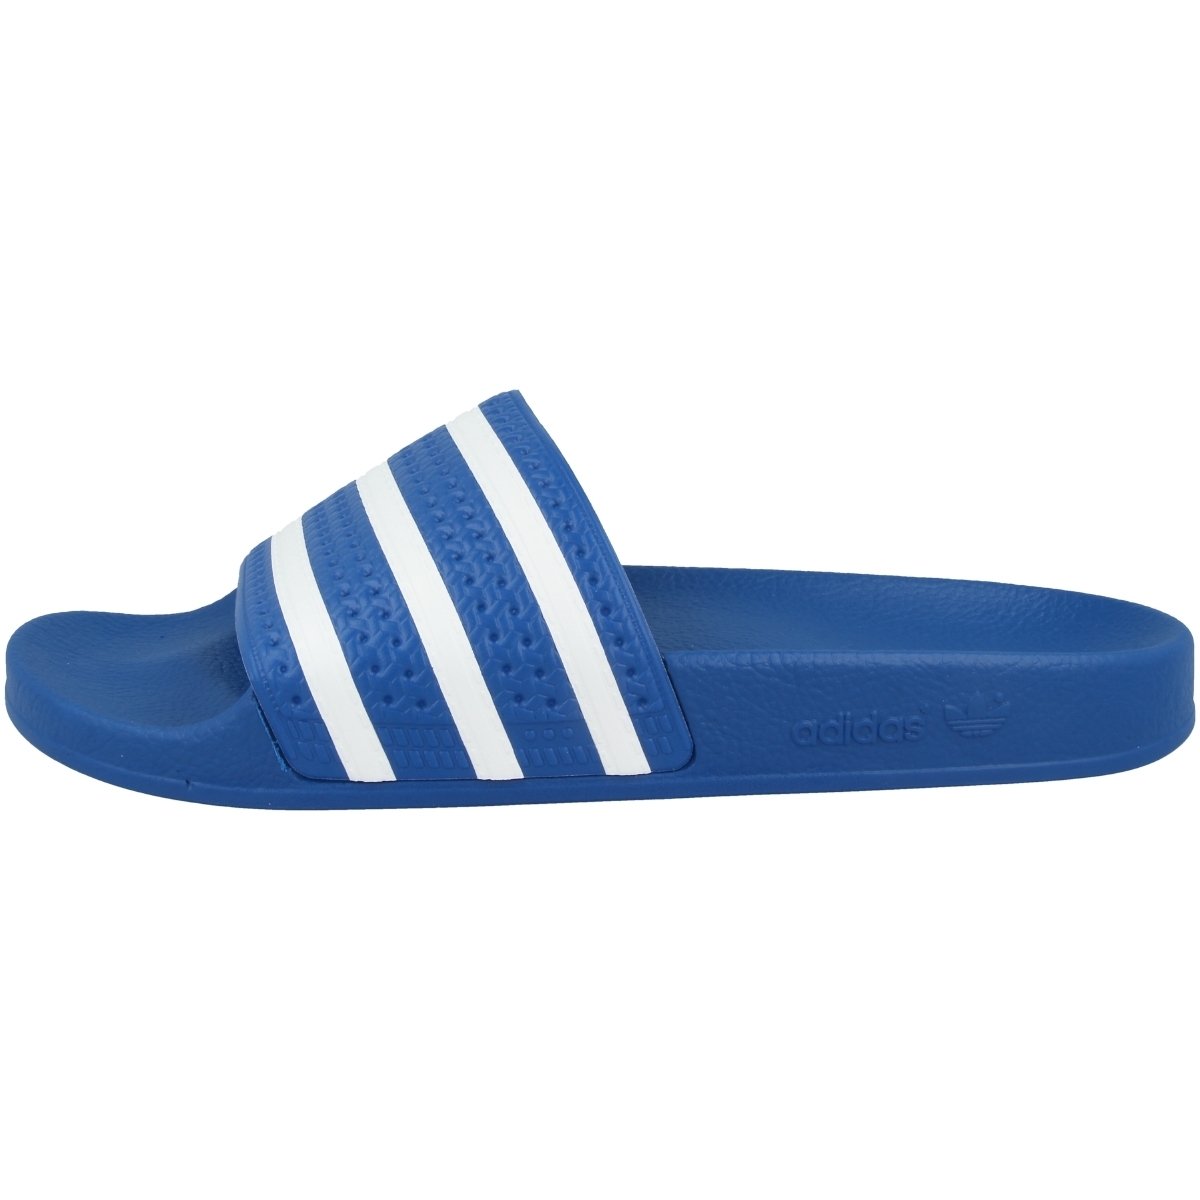 Adidas Adilette Badelatschen blau